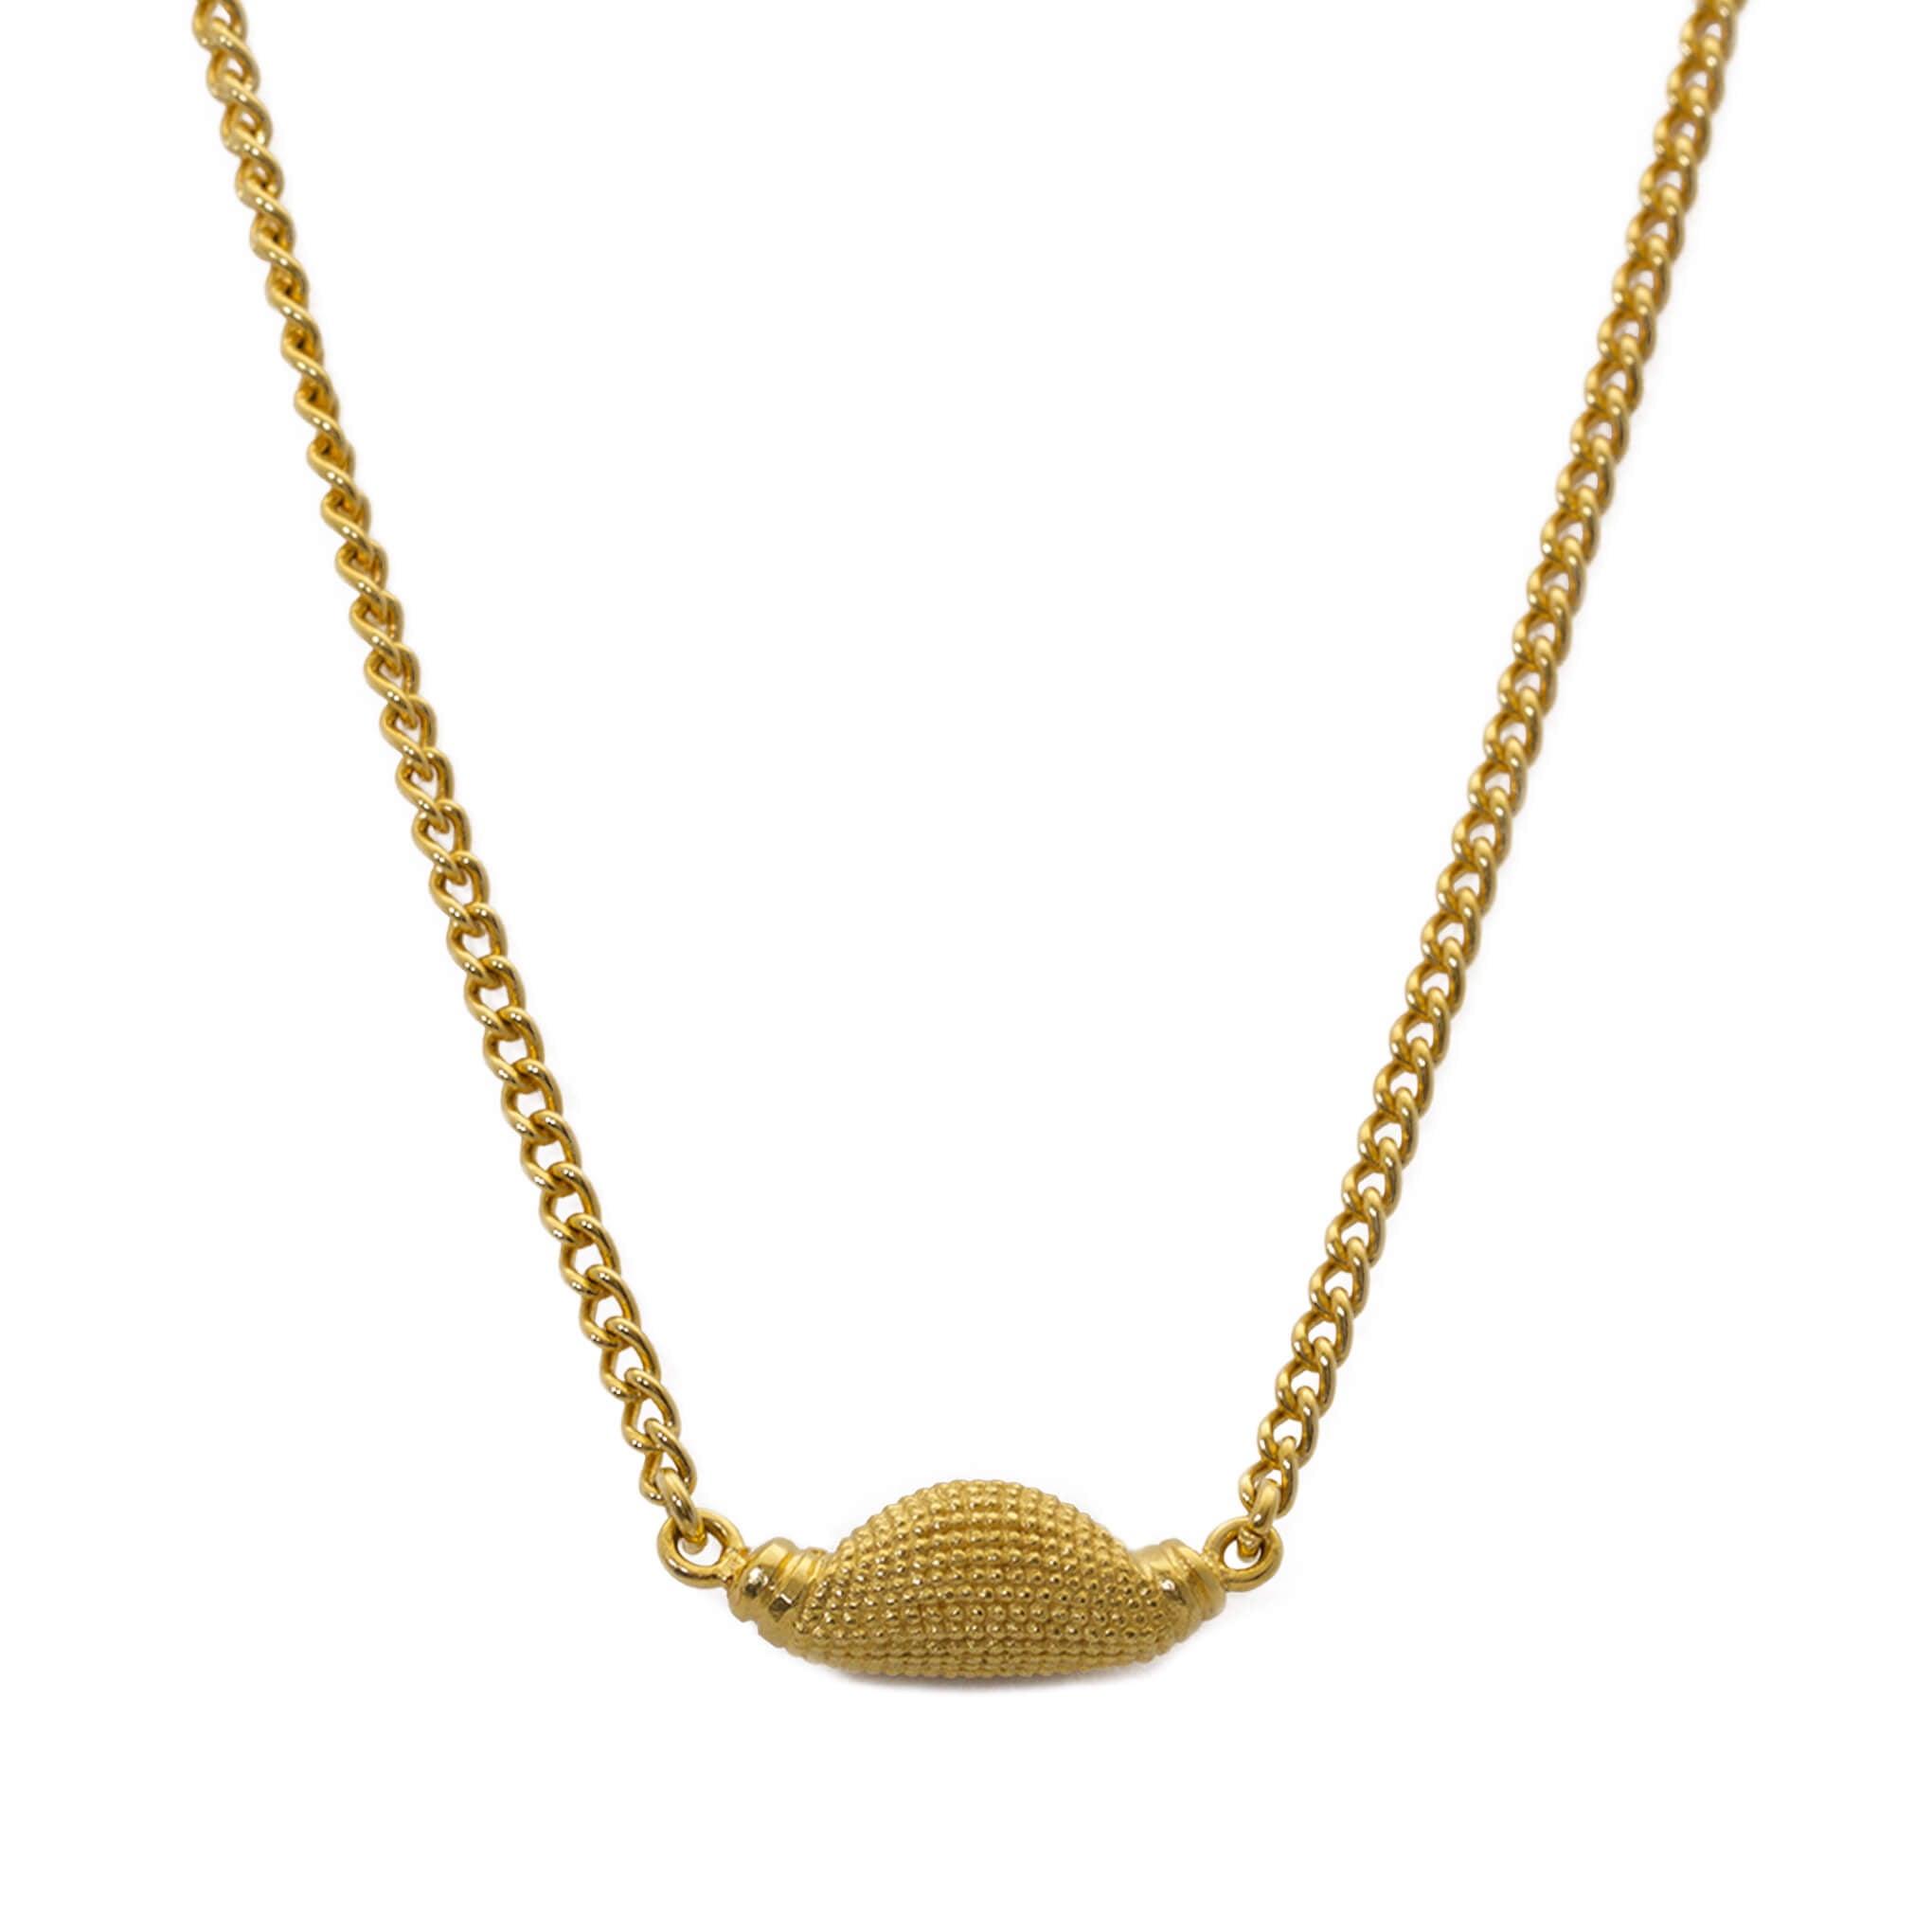 Maxilla Pod short necklace in yellow gold